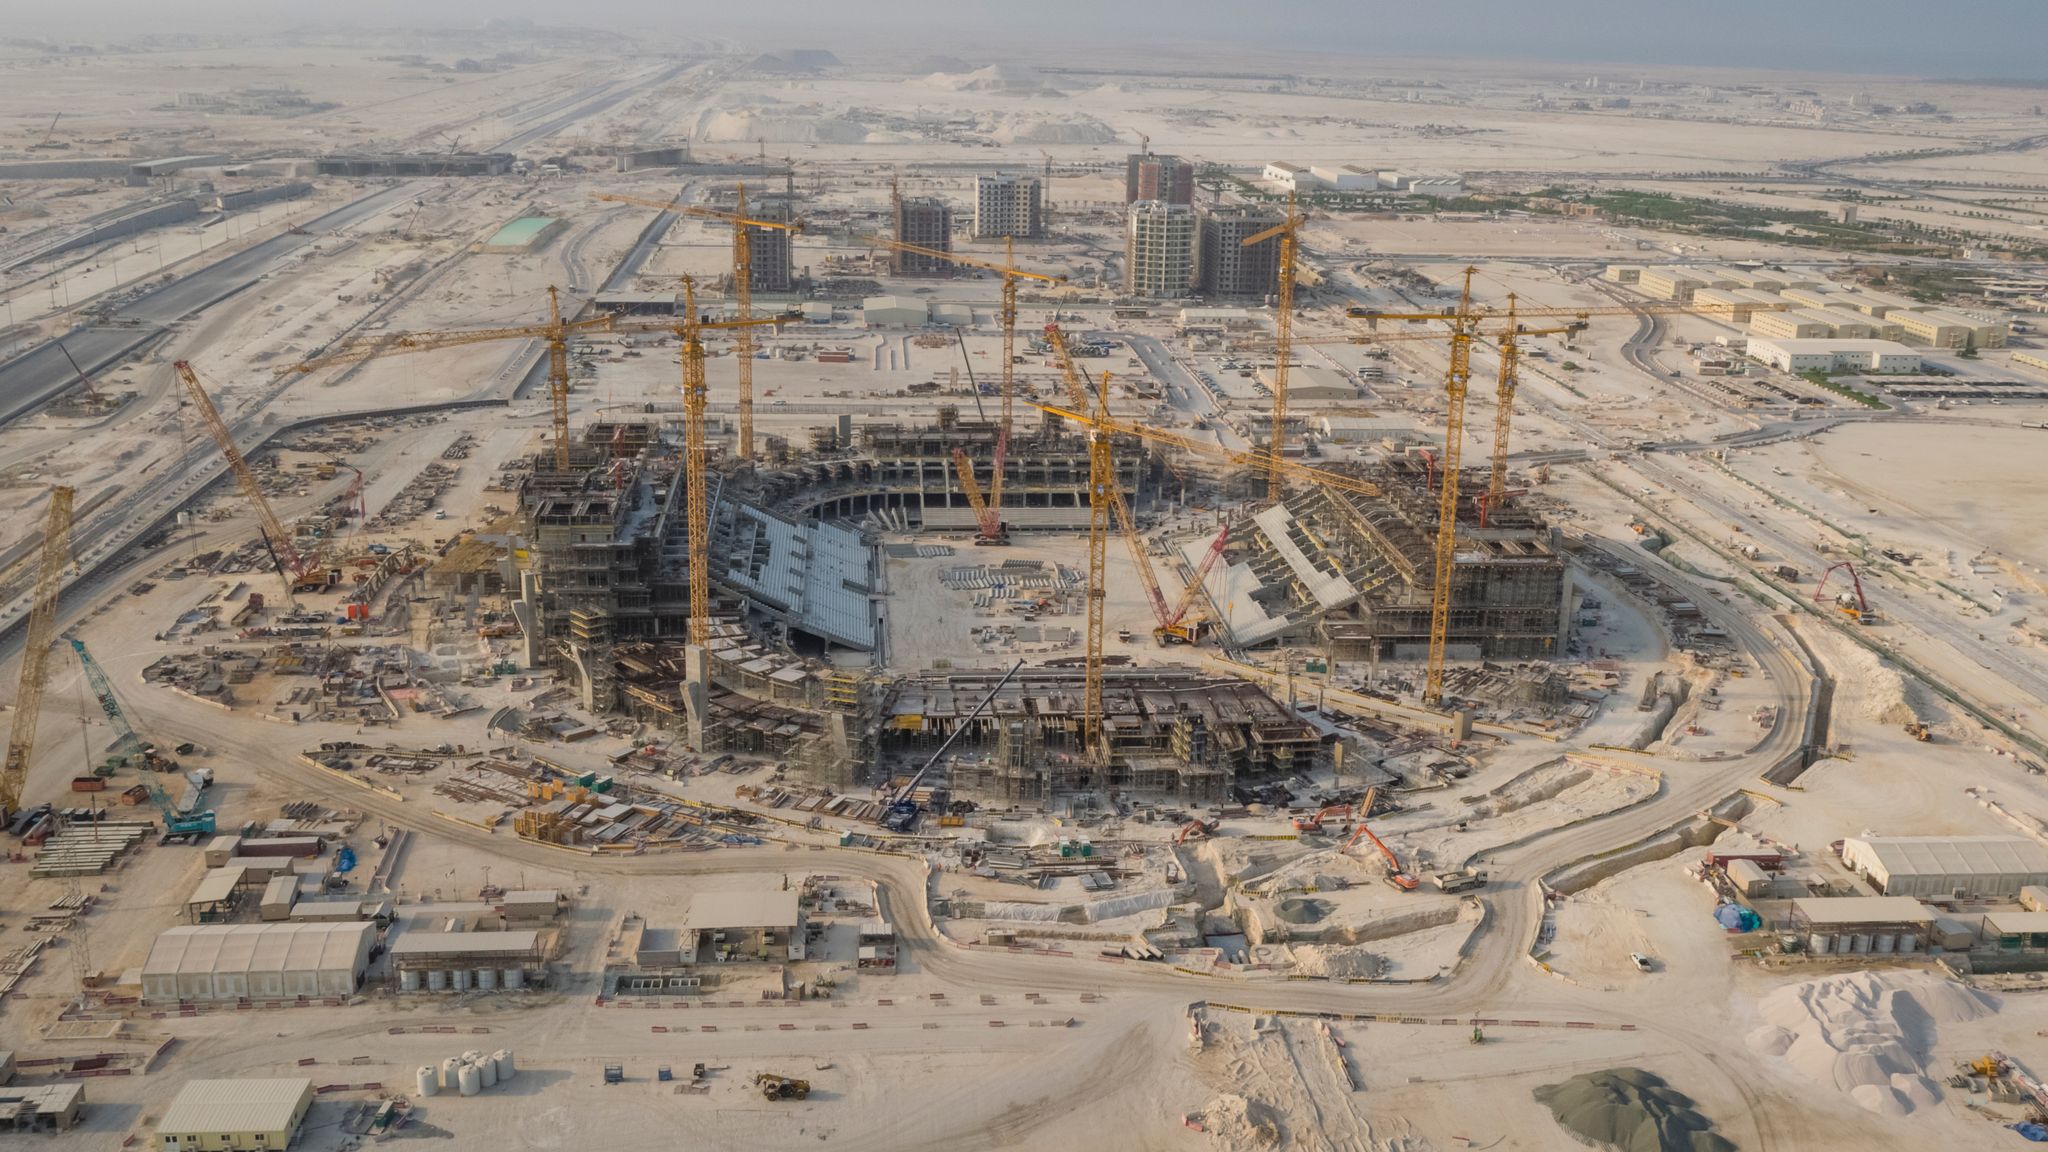 Qatar 2022 chairman says progress made despite 'high number' of deaths